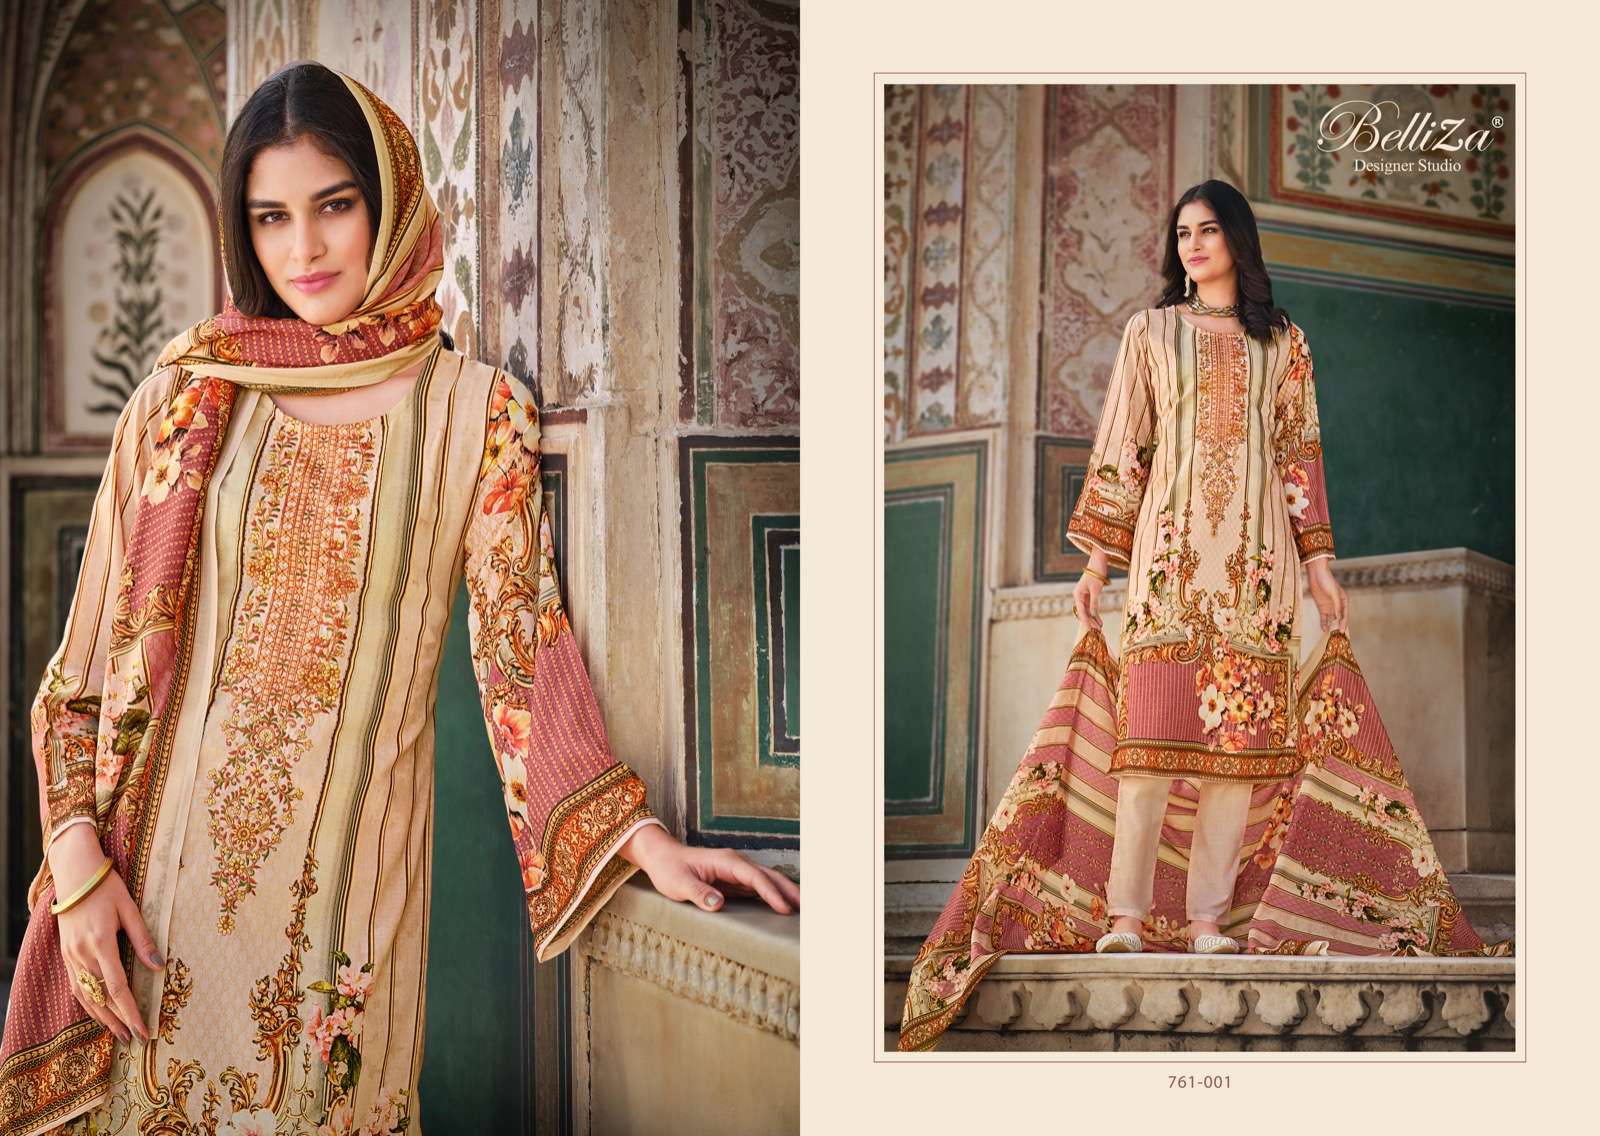 belliza designer studio zaina indian designer salwar suits catalogue wholesaler surat 